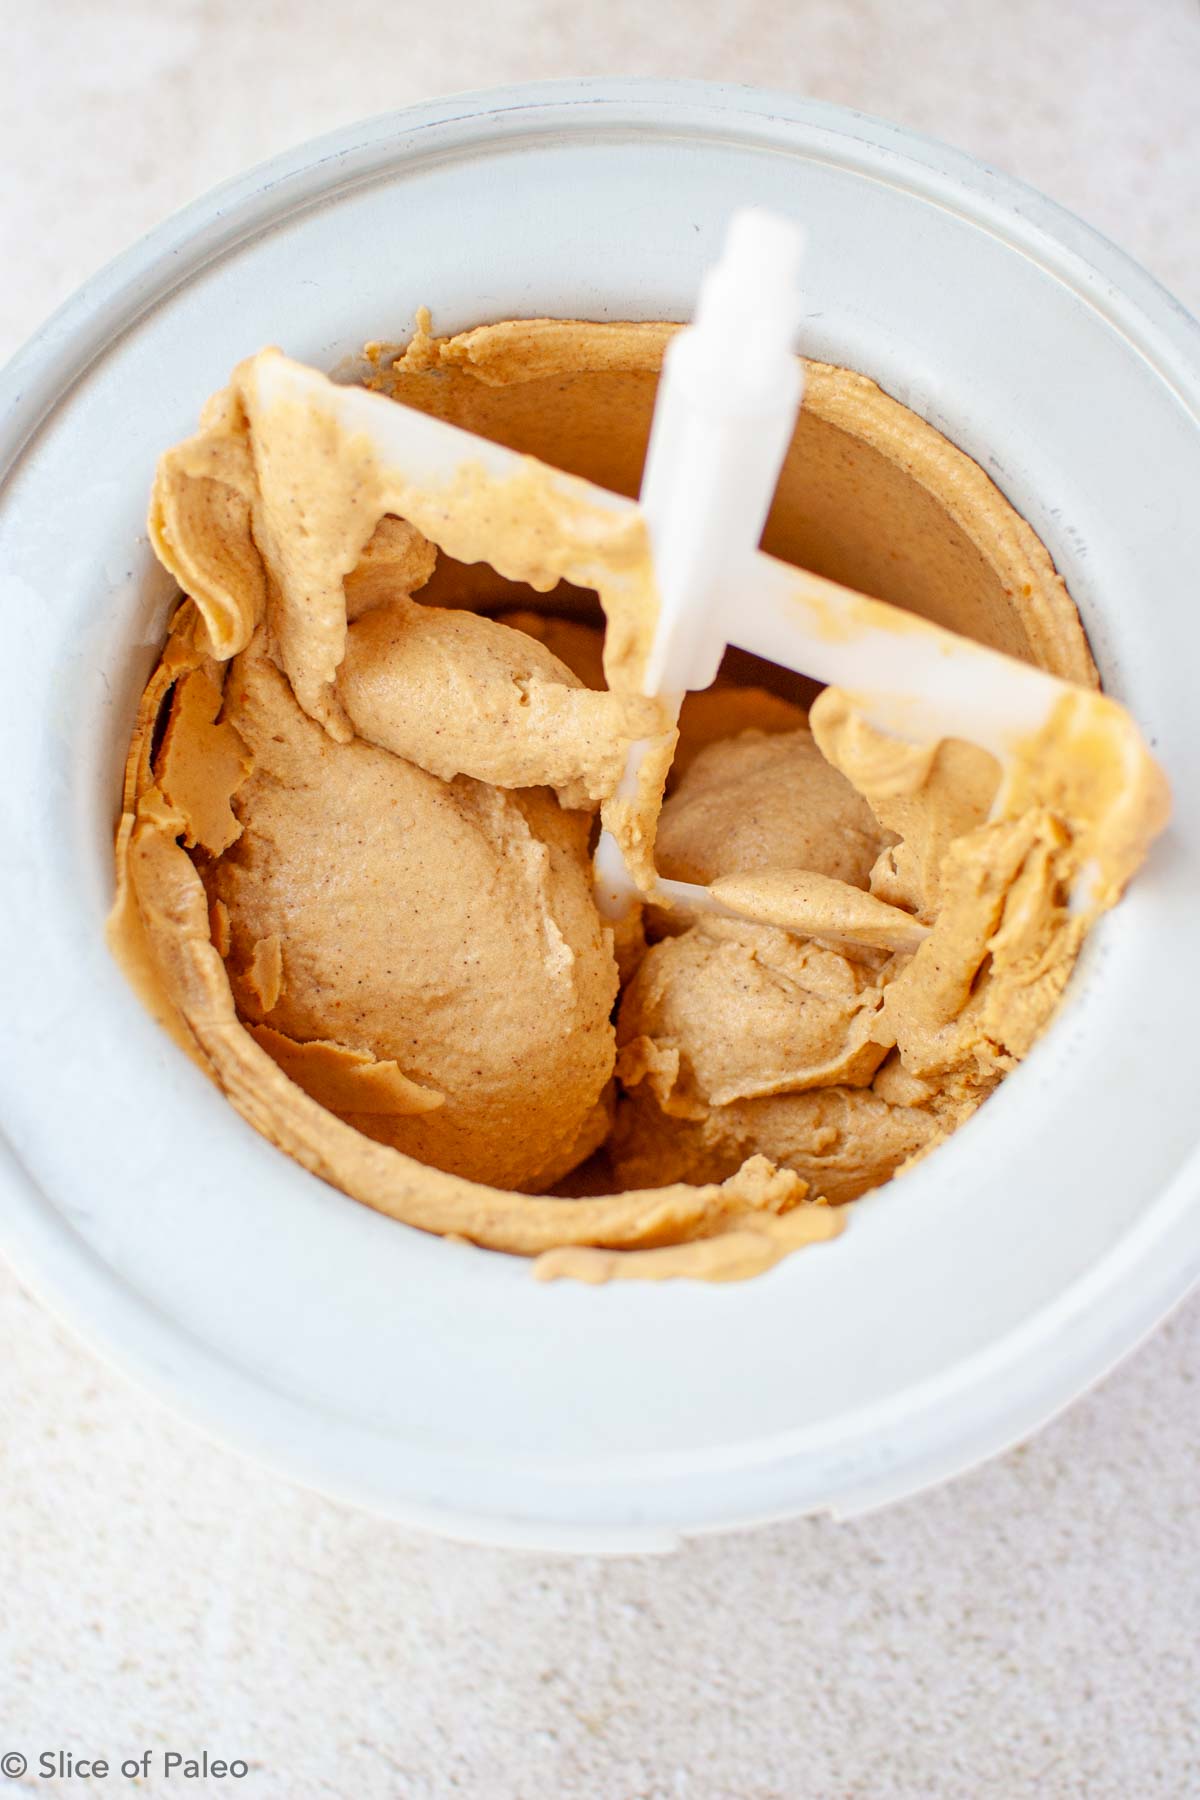 Paleo pumpkin ice cream churning in ice cream maker